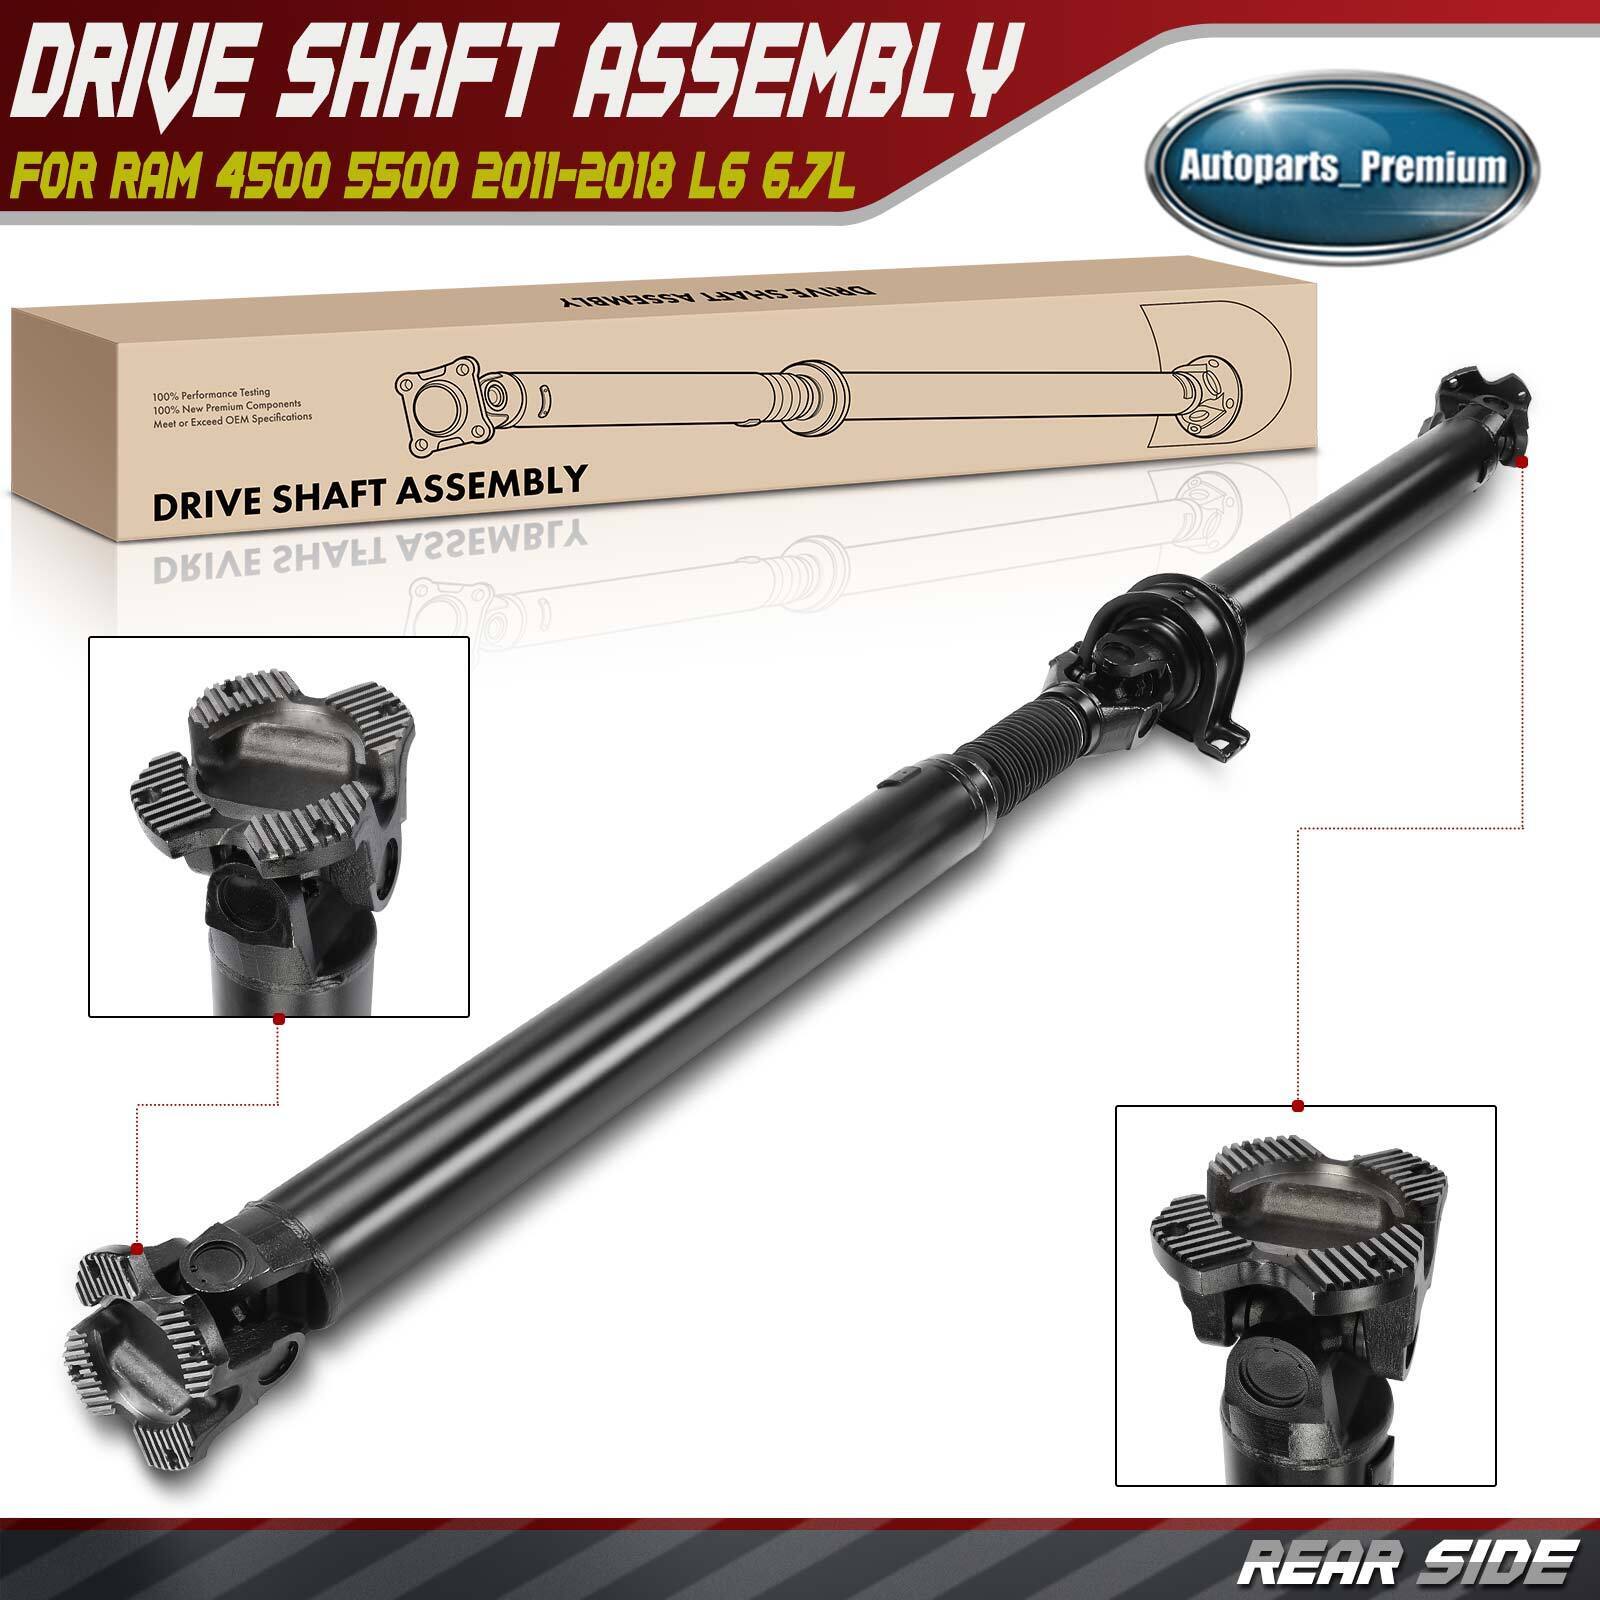 New Rear Side Driveshaft Prop Shaft Assembly for Ram 4500 5500 2011-2018 L6 6.7L